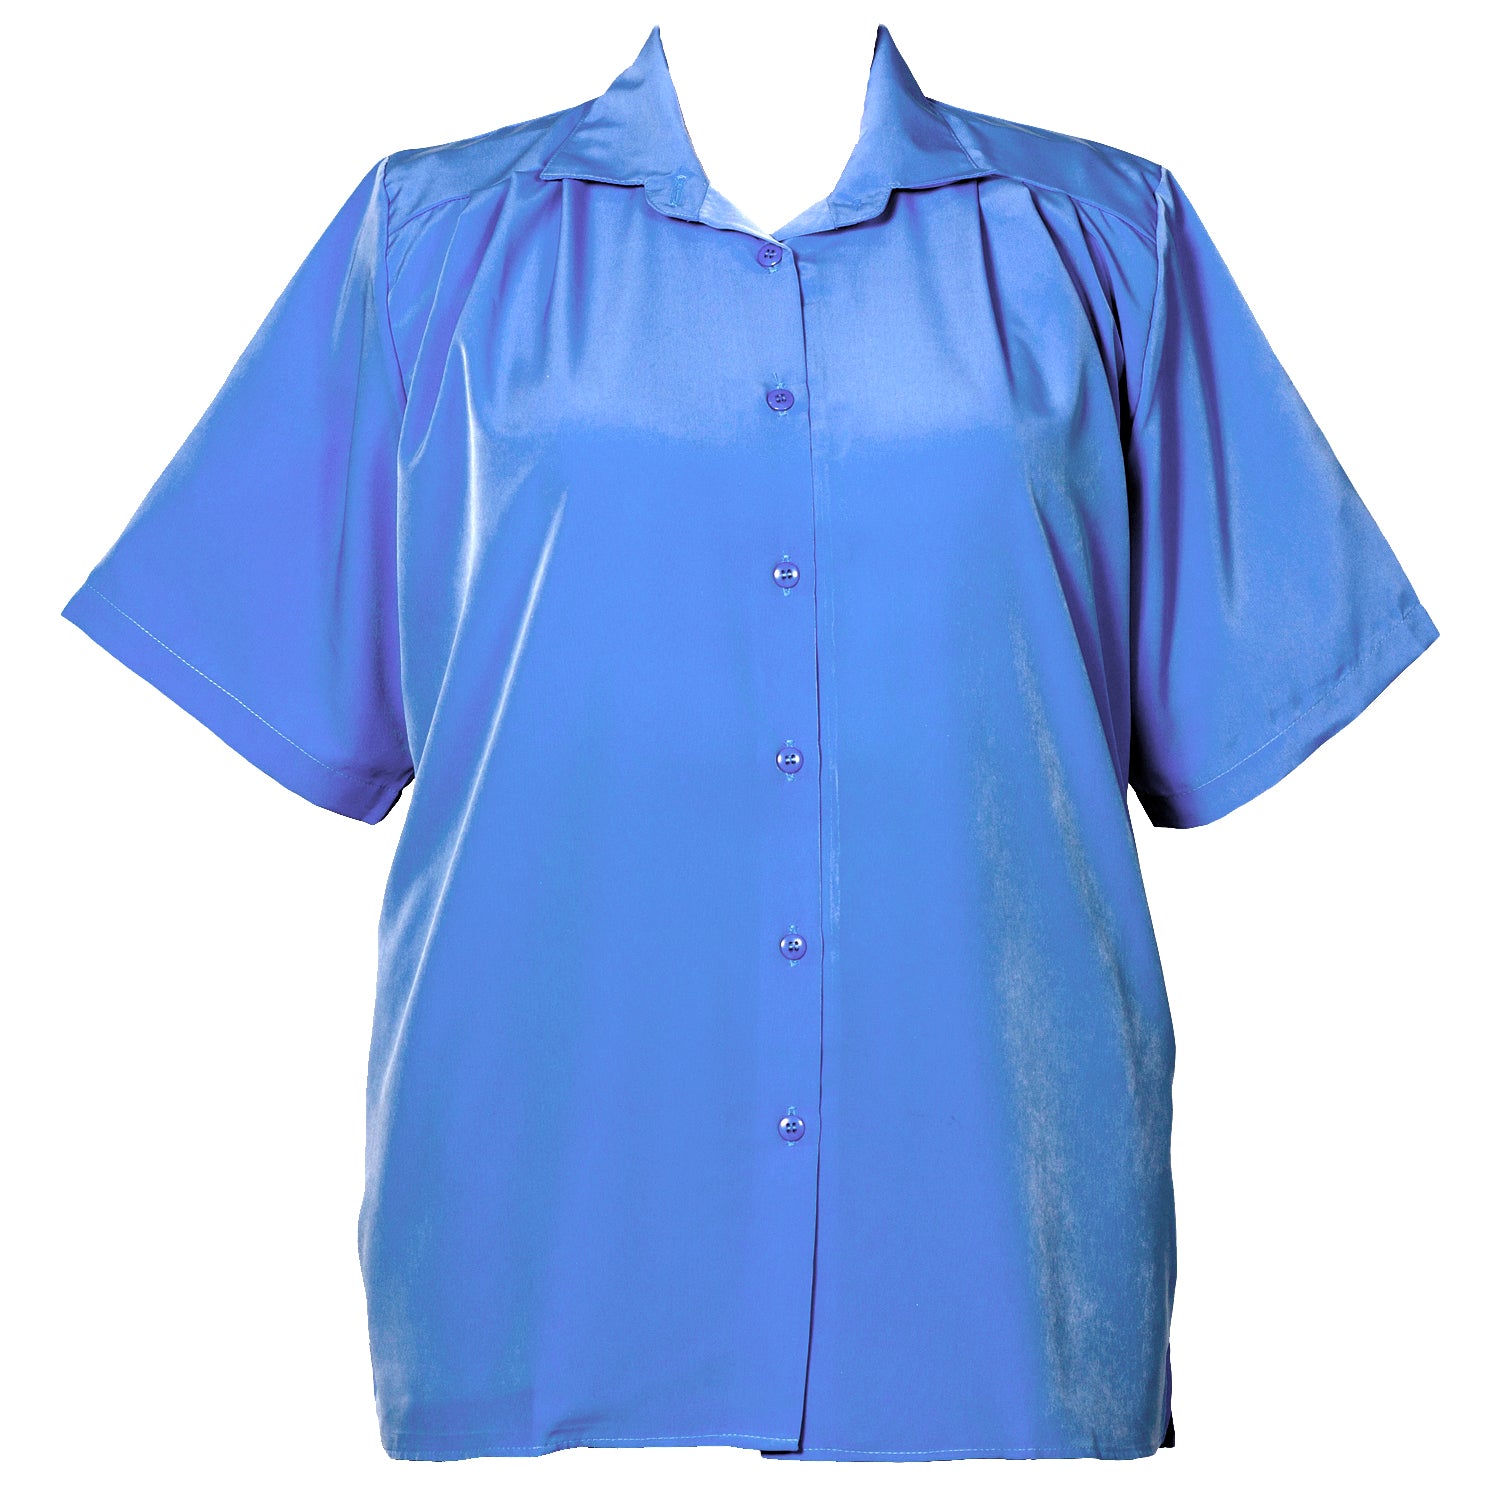 Slate Blue short sleeve Tunic Women's Plus Size Blouse